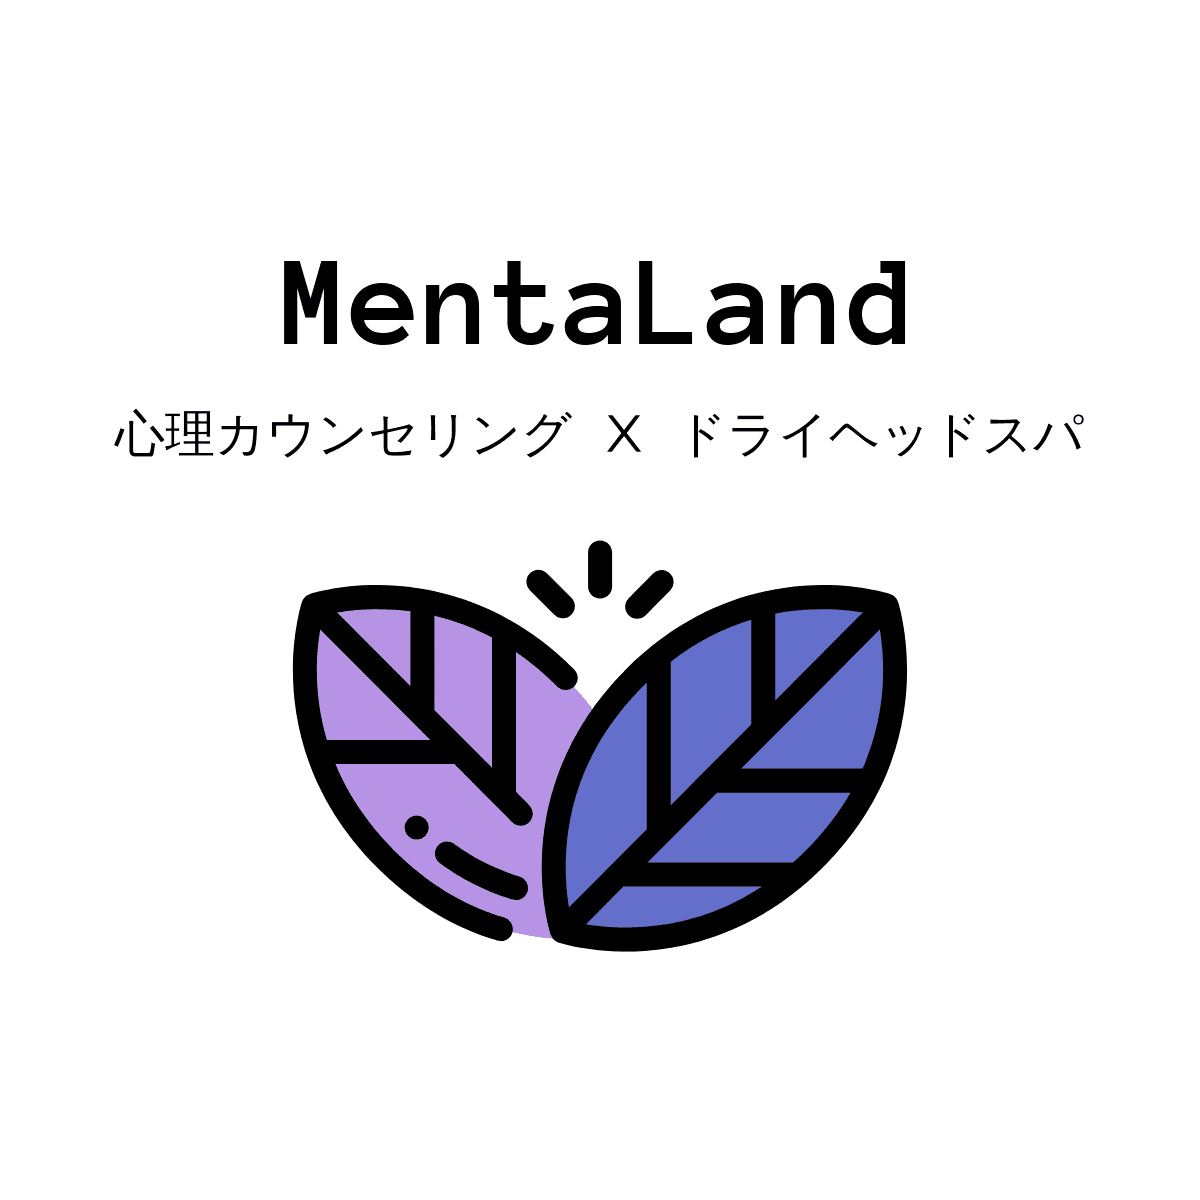 MentaLand